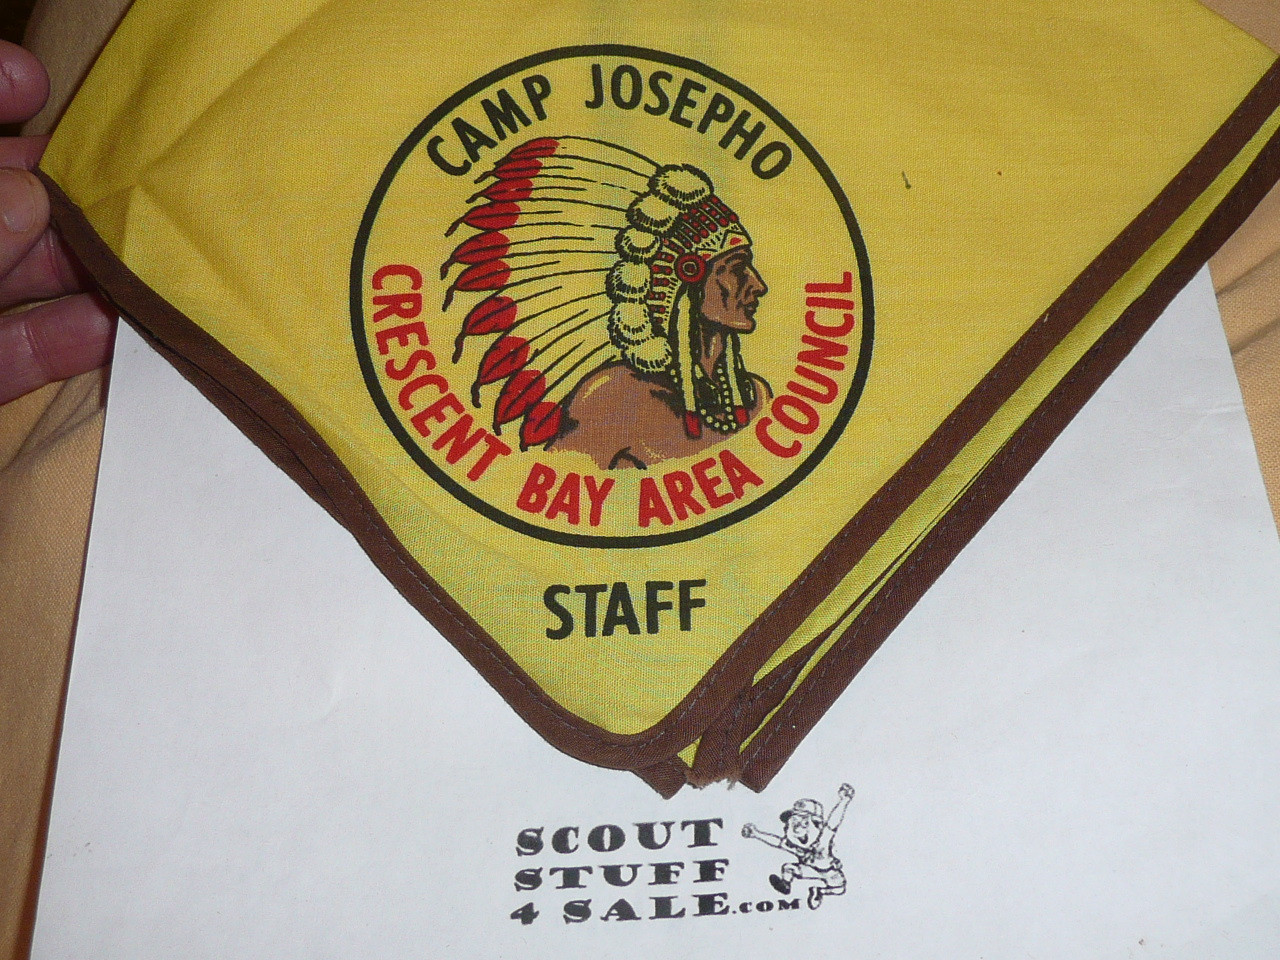 1960's Camp Josepho Staff Neckerchief, Crescent Bay Area Council, Lite use